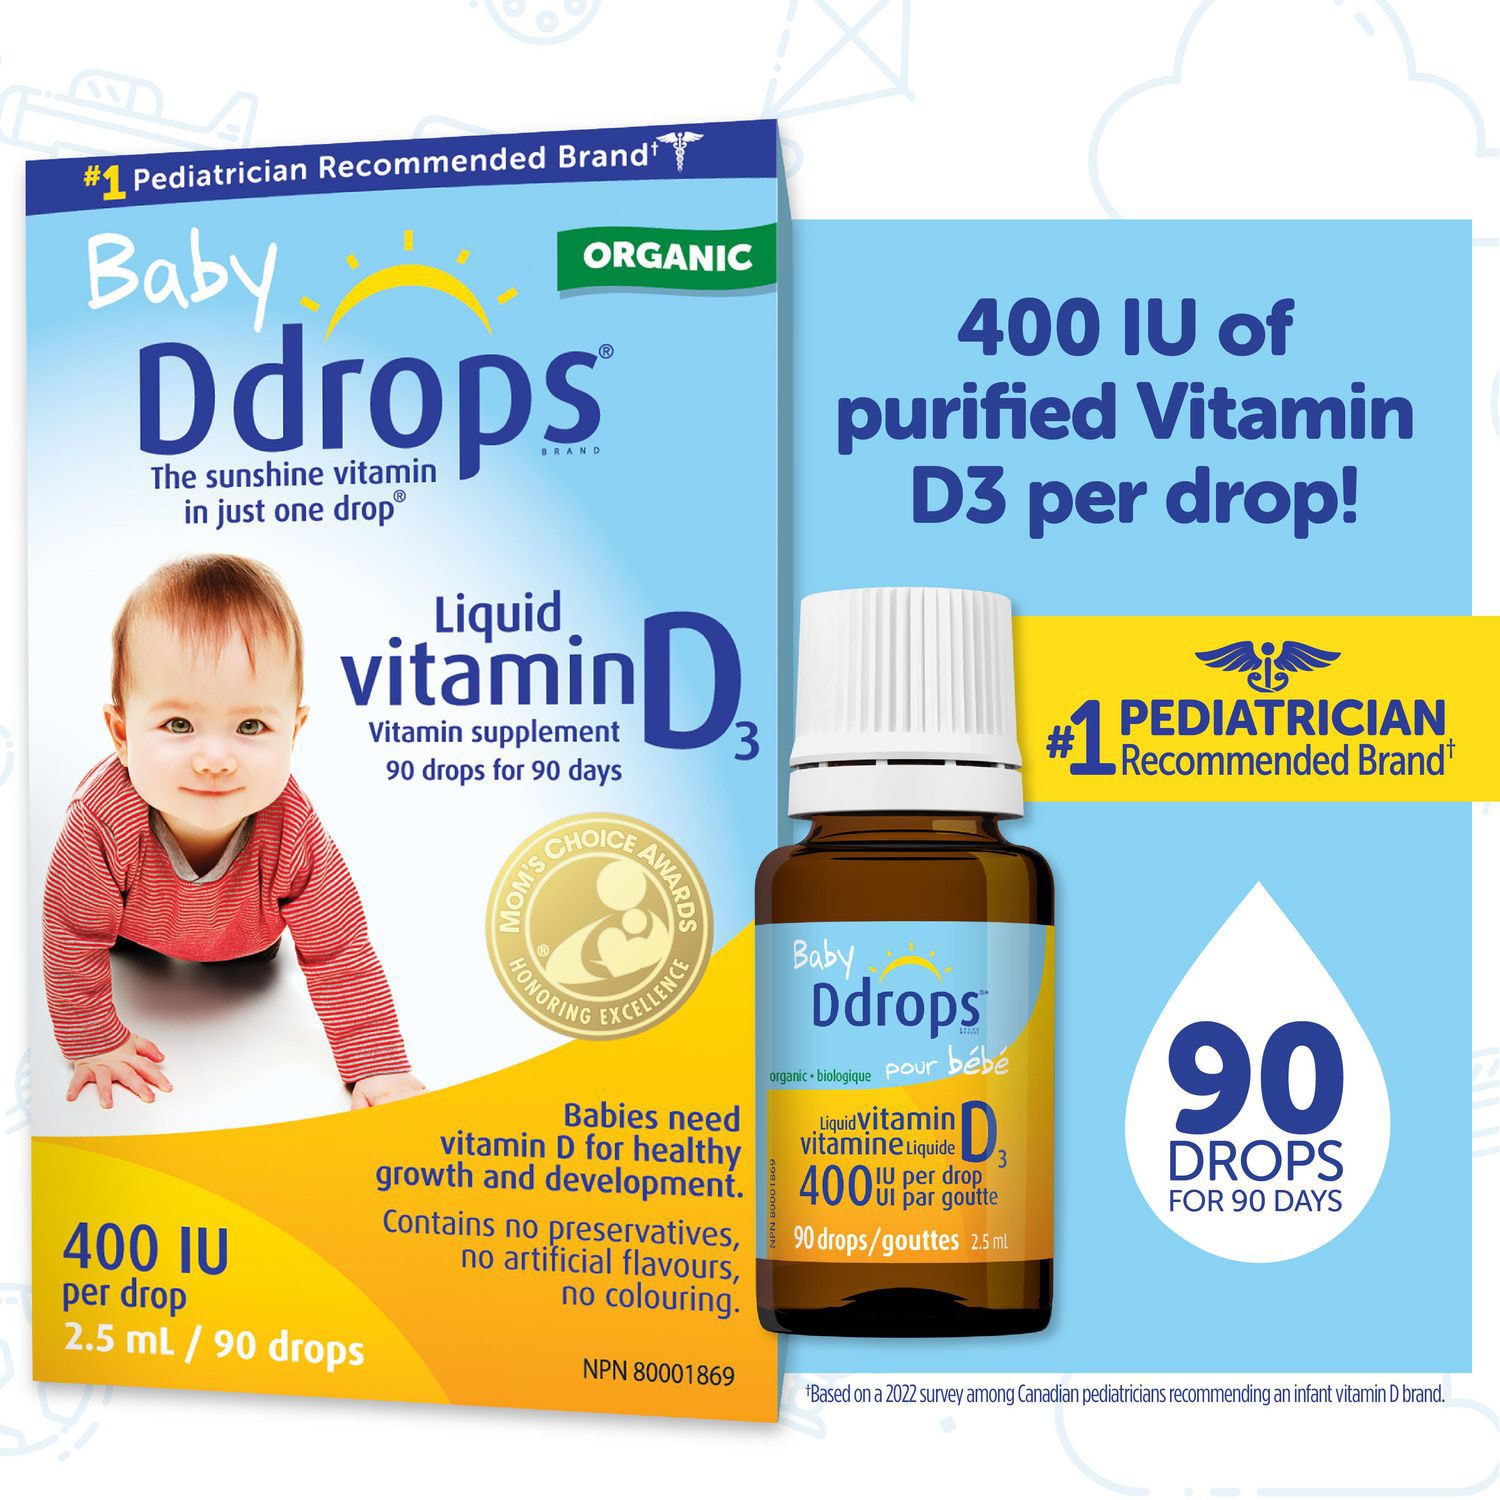 Baby Ddrops® Liquid Vitamin D3 Vitamin Supplement, 400 IU, 2.5 ml